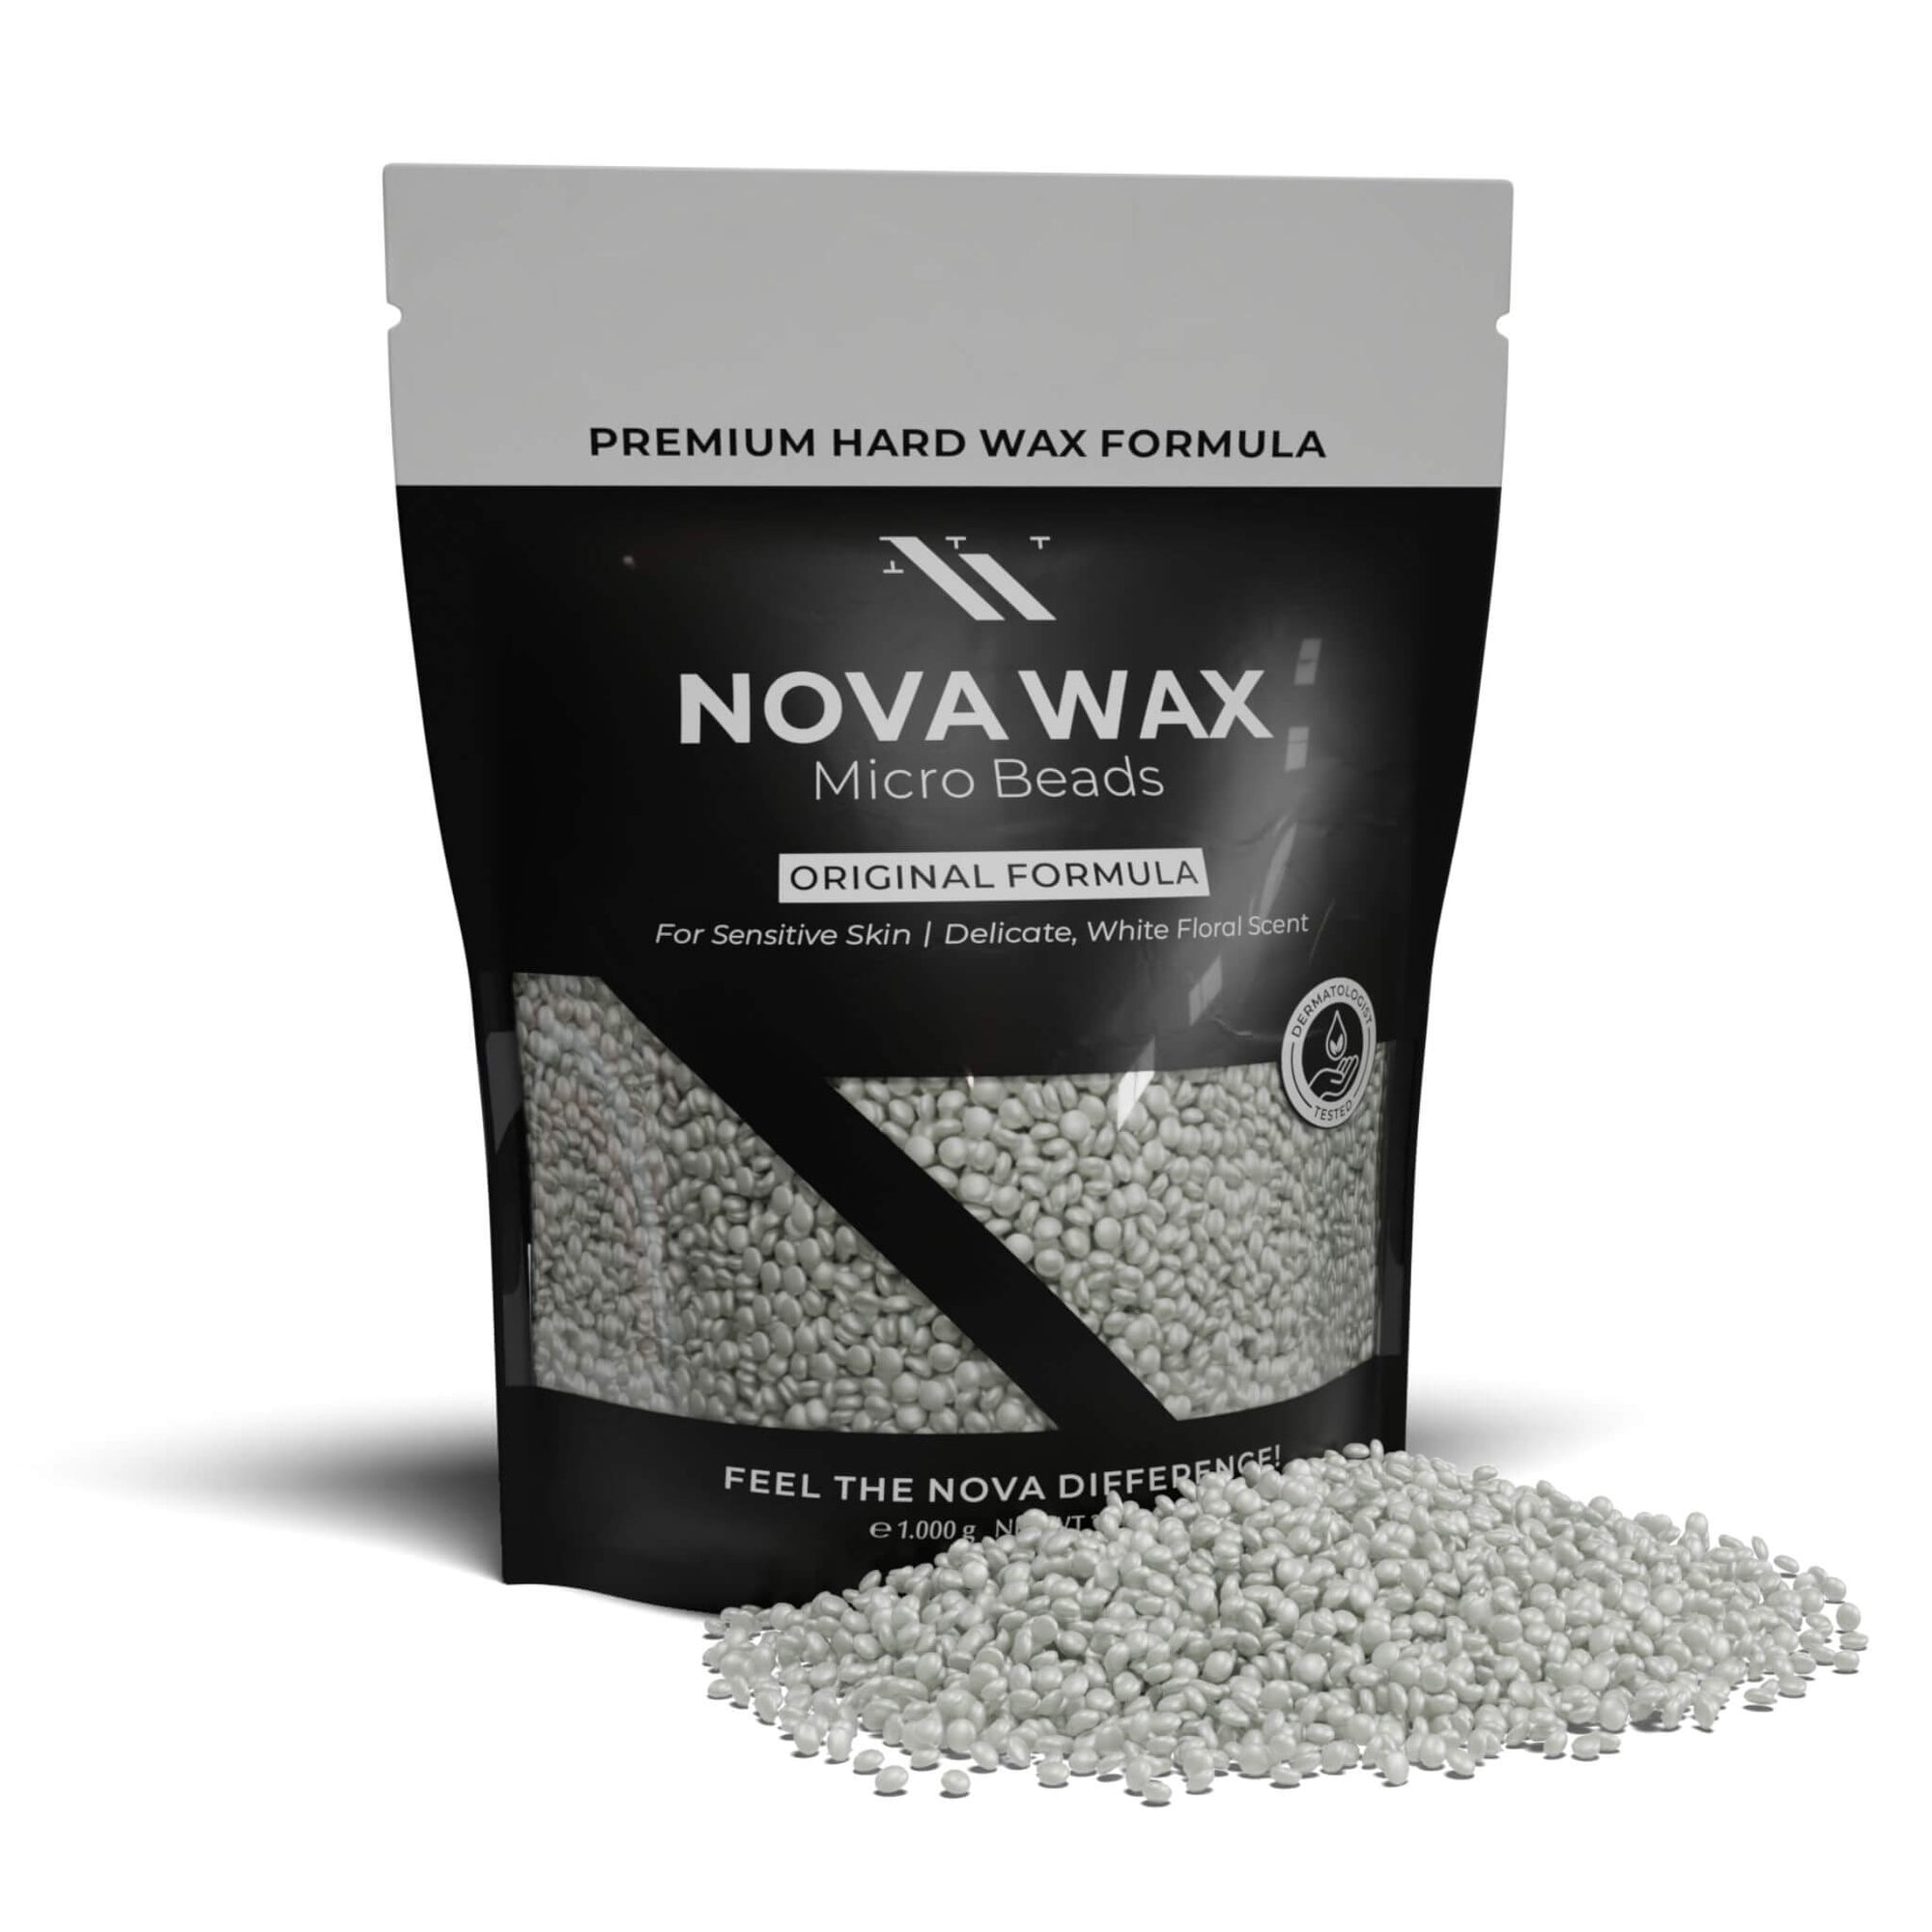 Wax n Waxing Depilatory Hard Wax - Refill by Kilo 35oz/1000g Original –  Natural Way Products Inc.